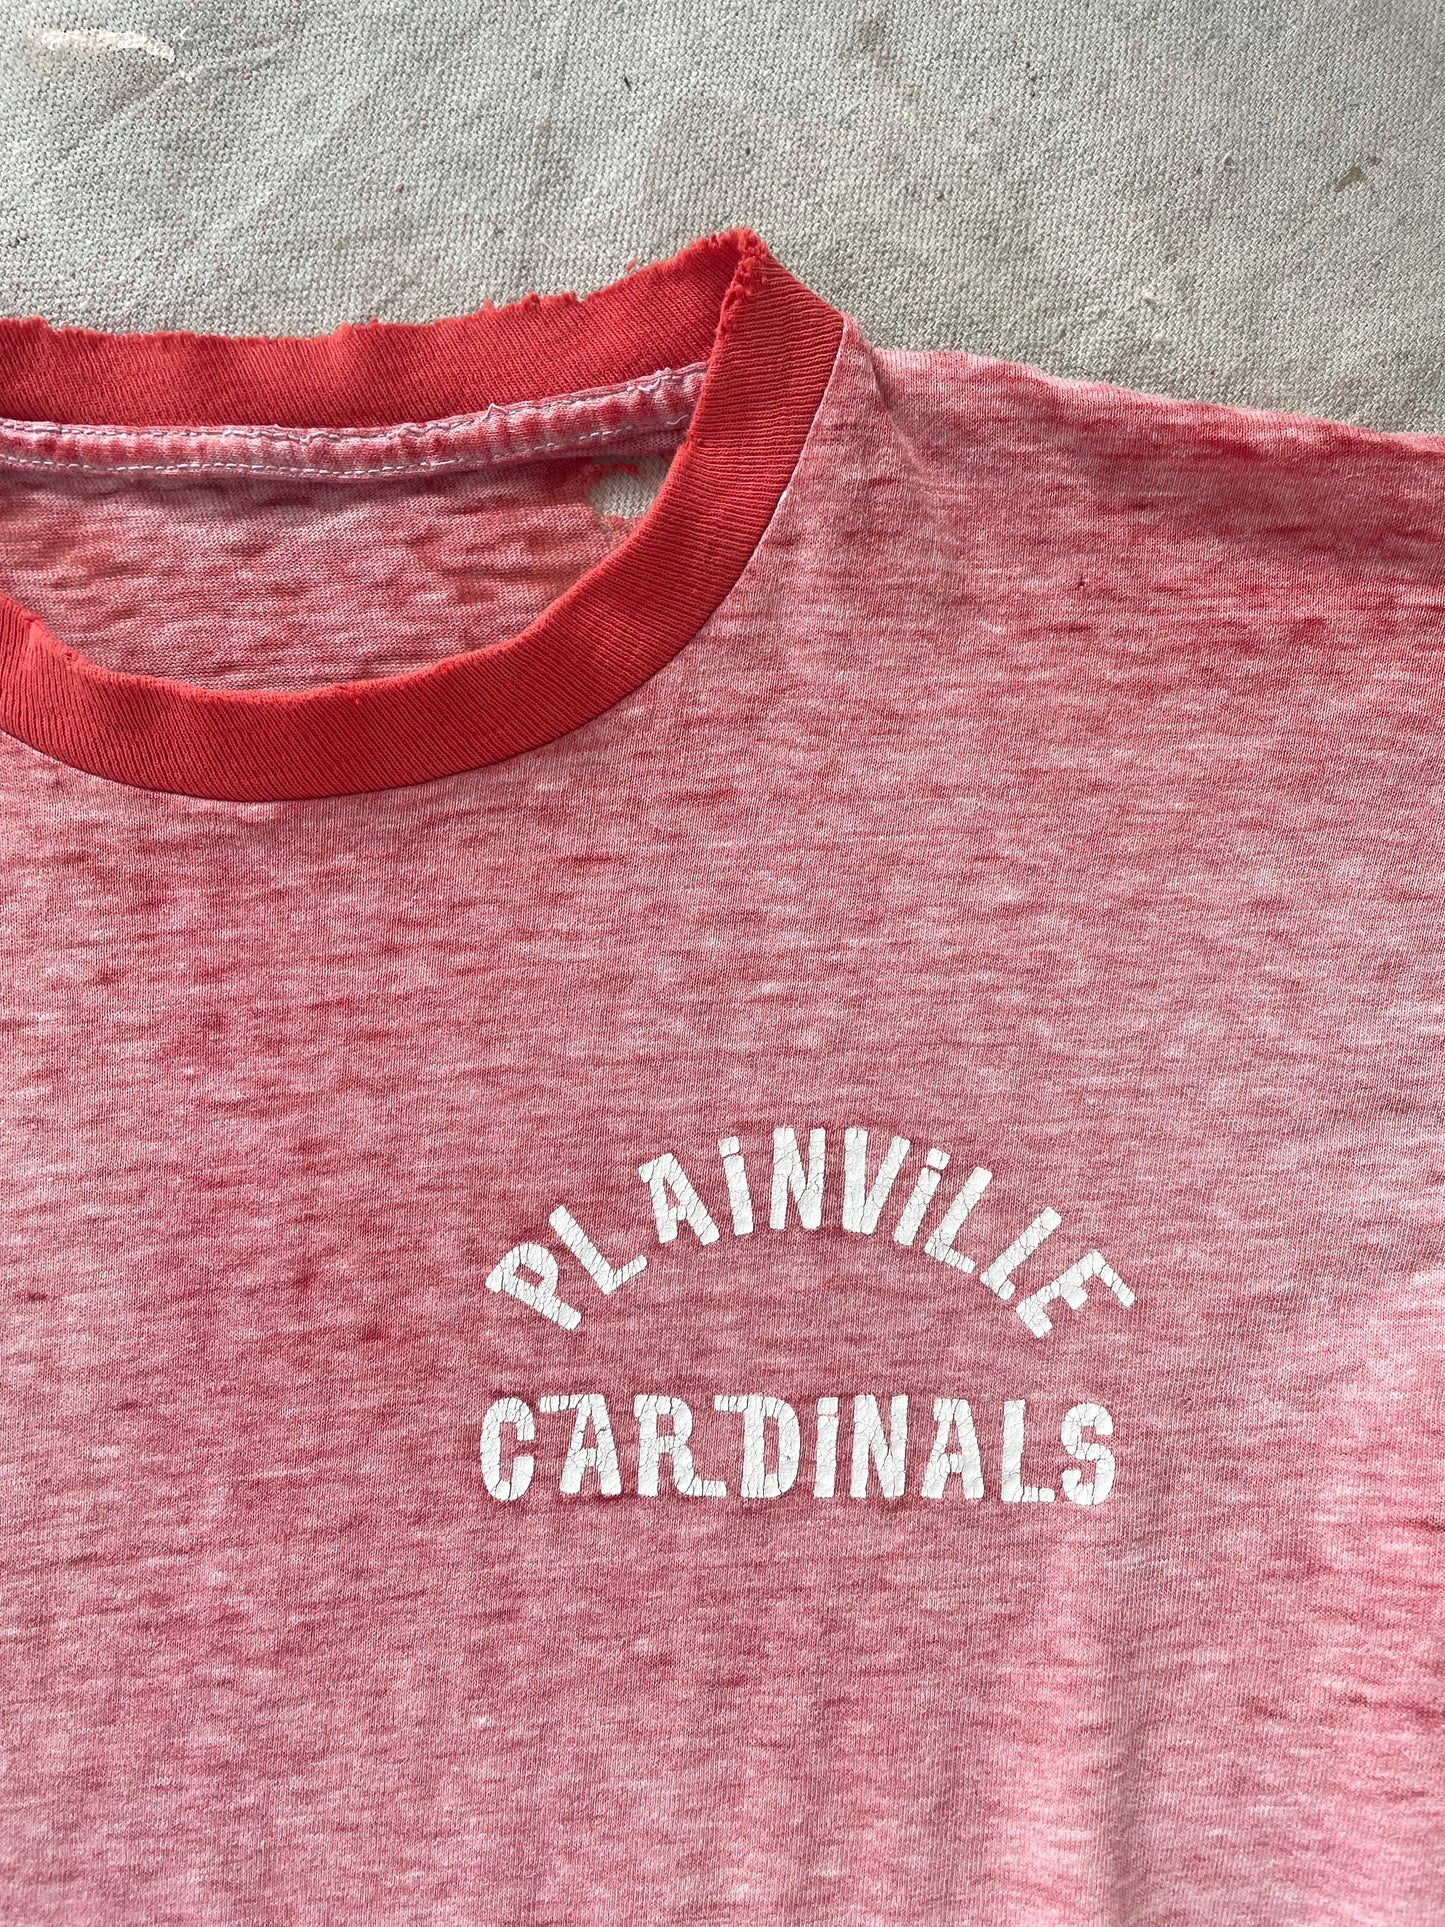 Plainville Cardinals Ringer Tee